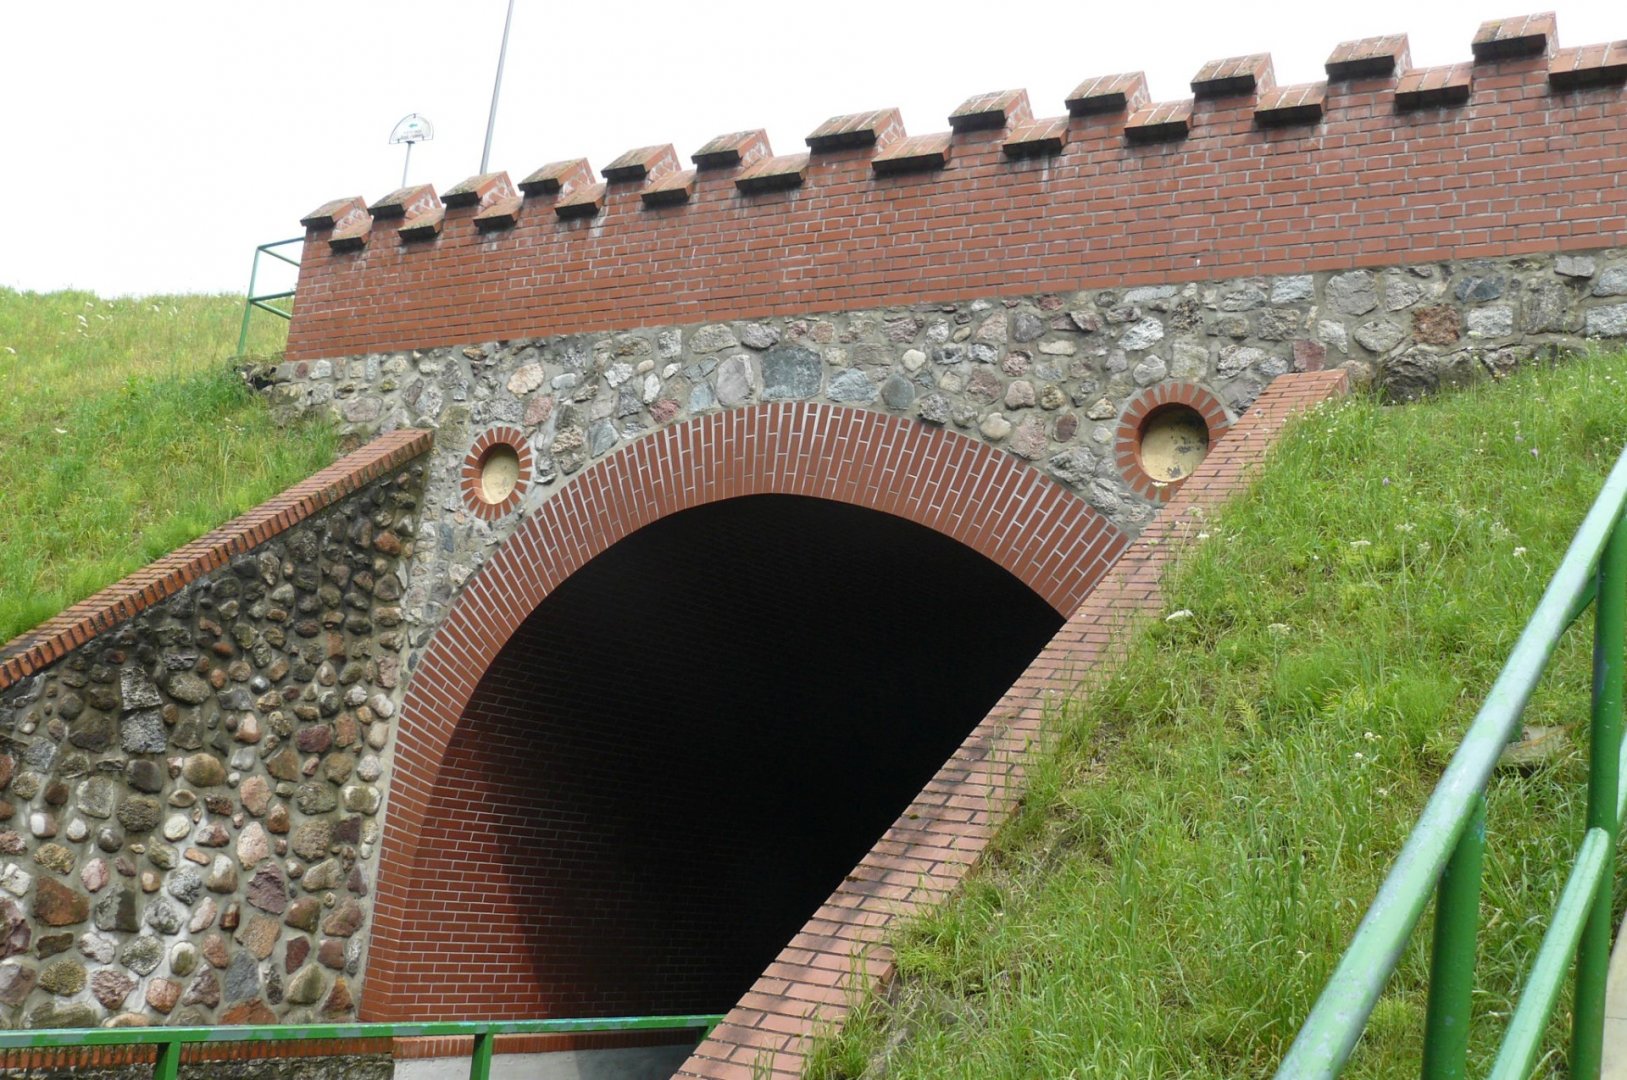 Fojutowo Aqueduct